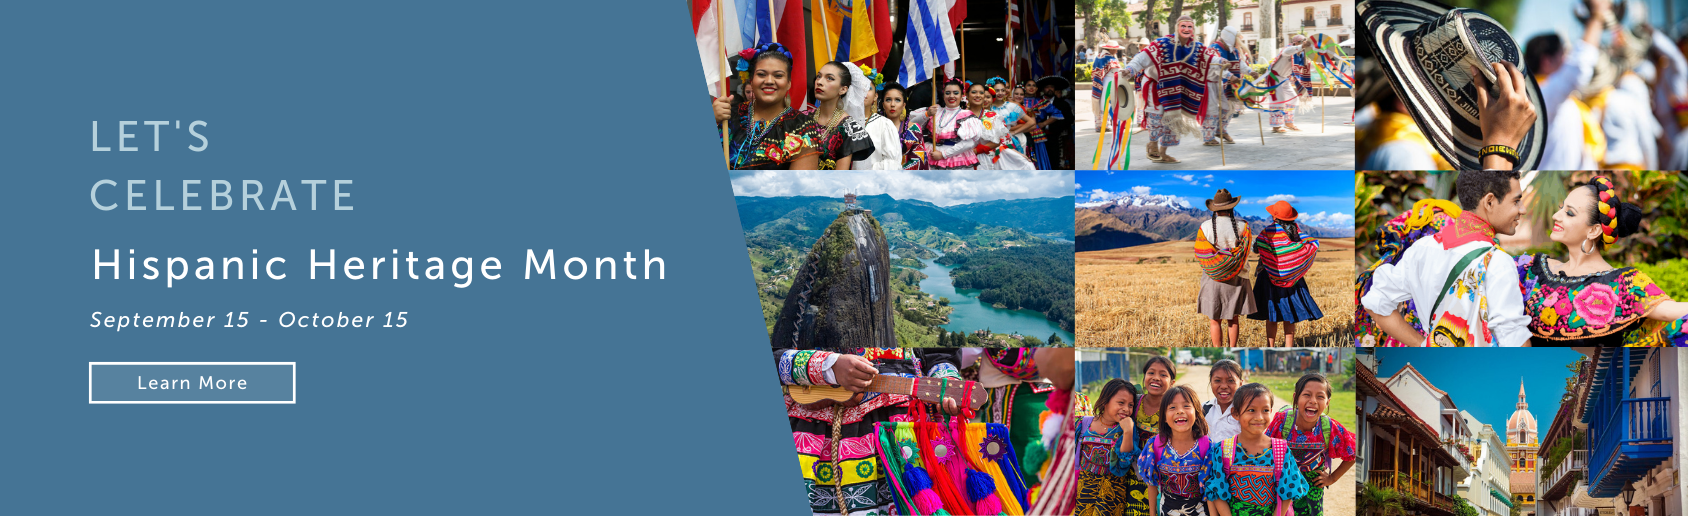 Hispanic-Heritage-Month-Banner.png